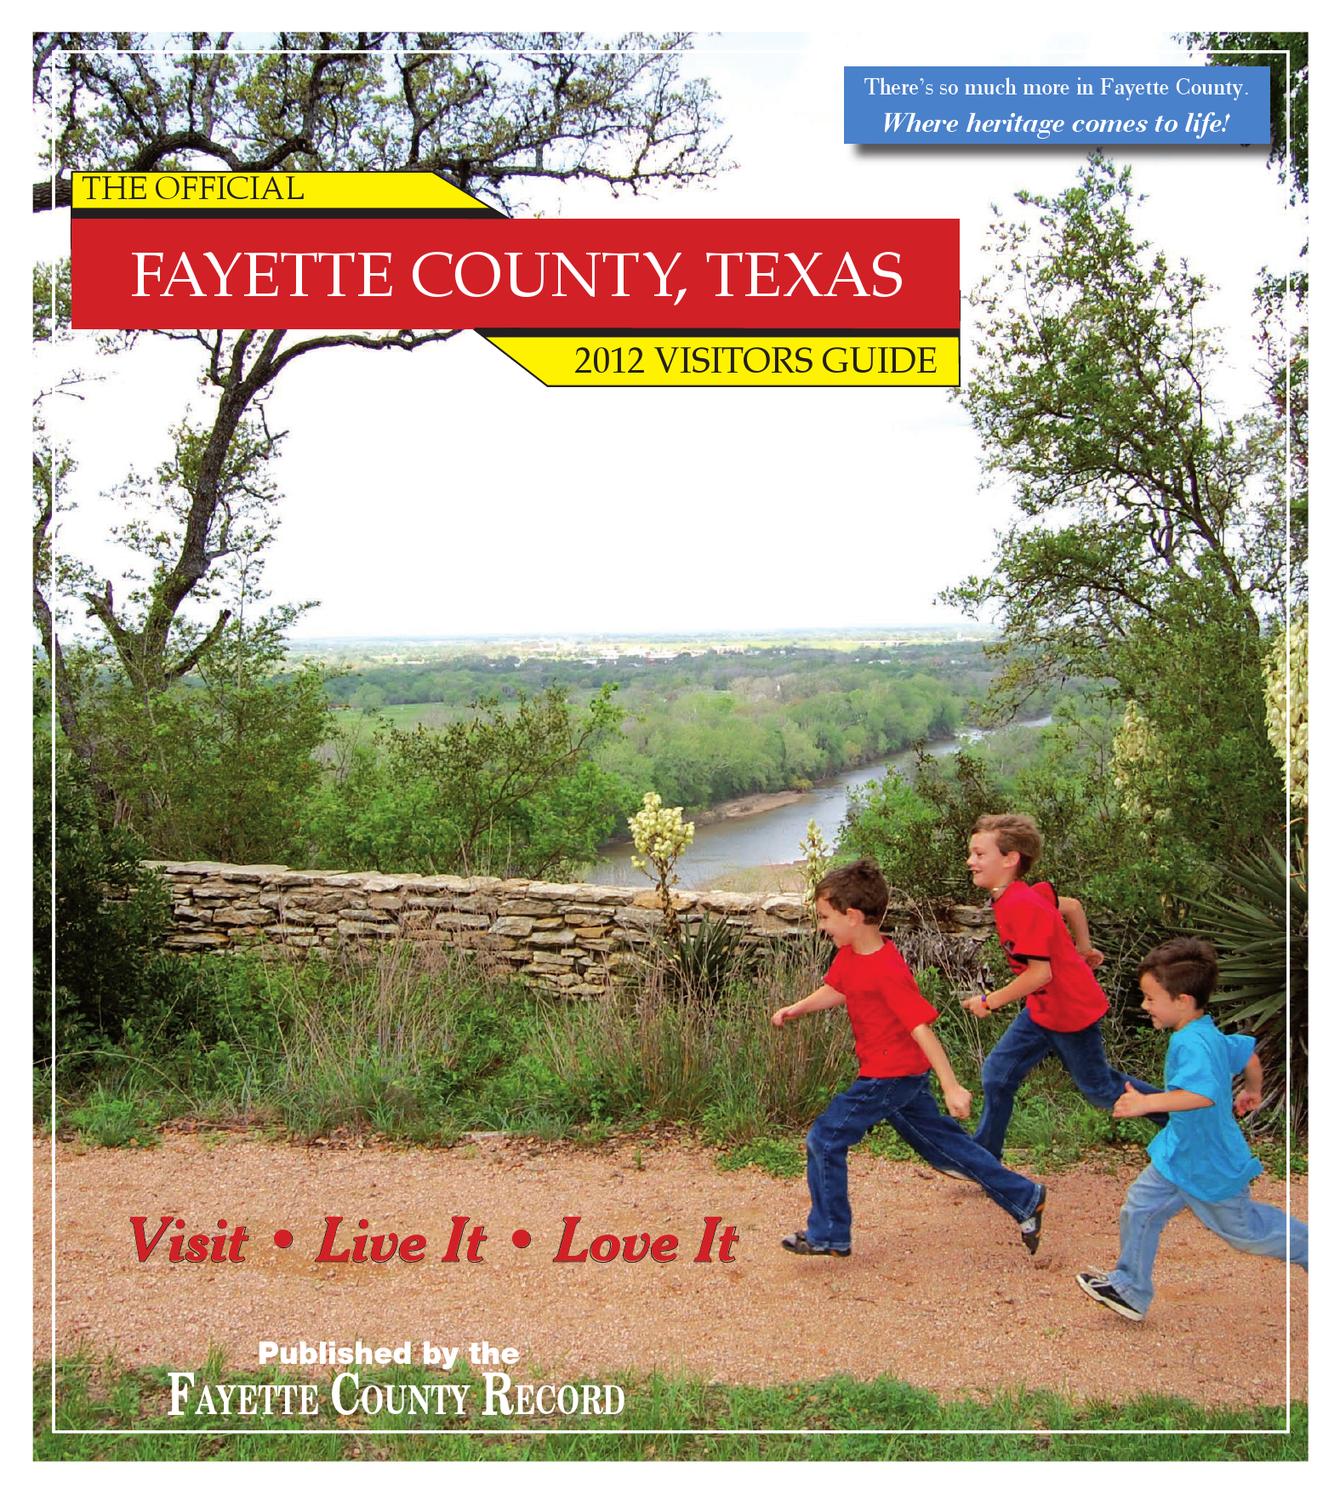 Kramer Garten Schön Fayette County Record Visitors Guide by Jeff Wick issuu